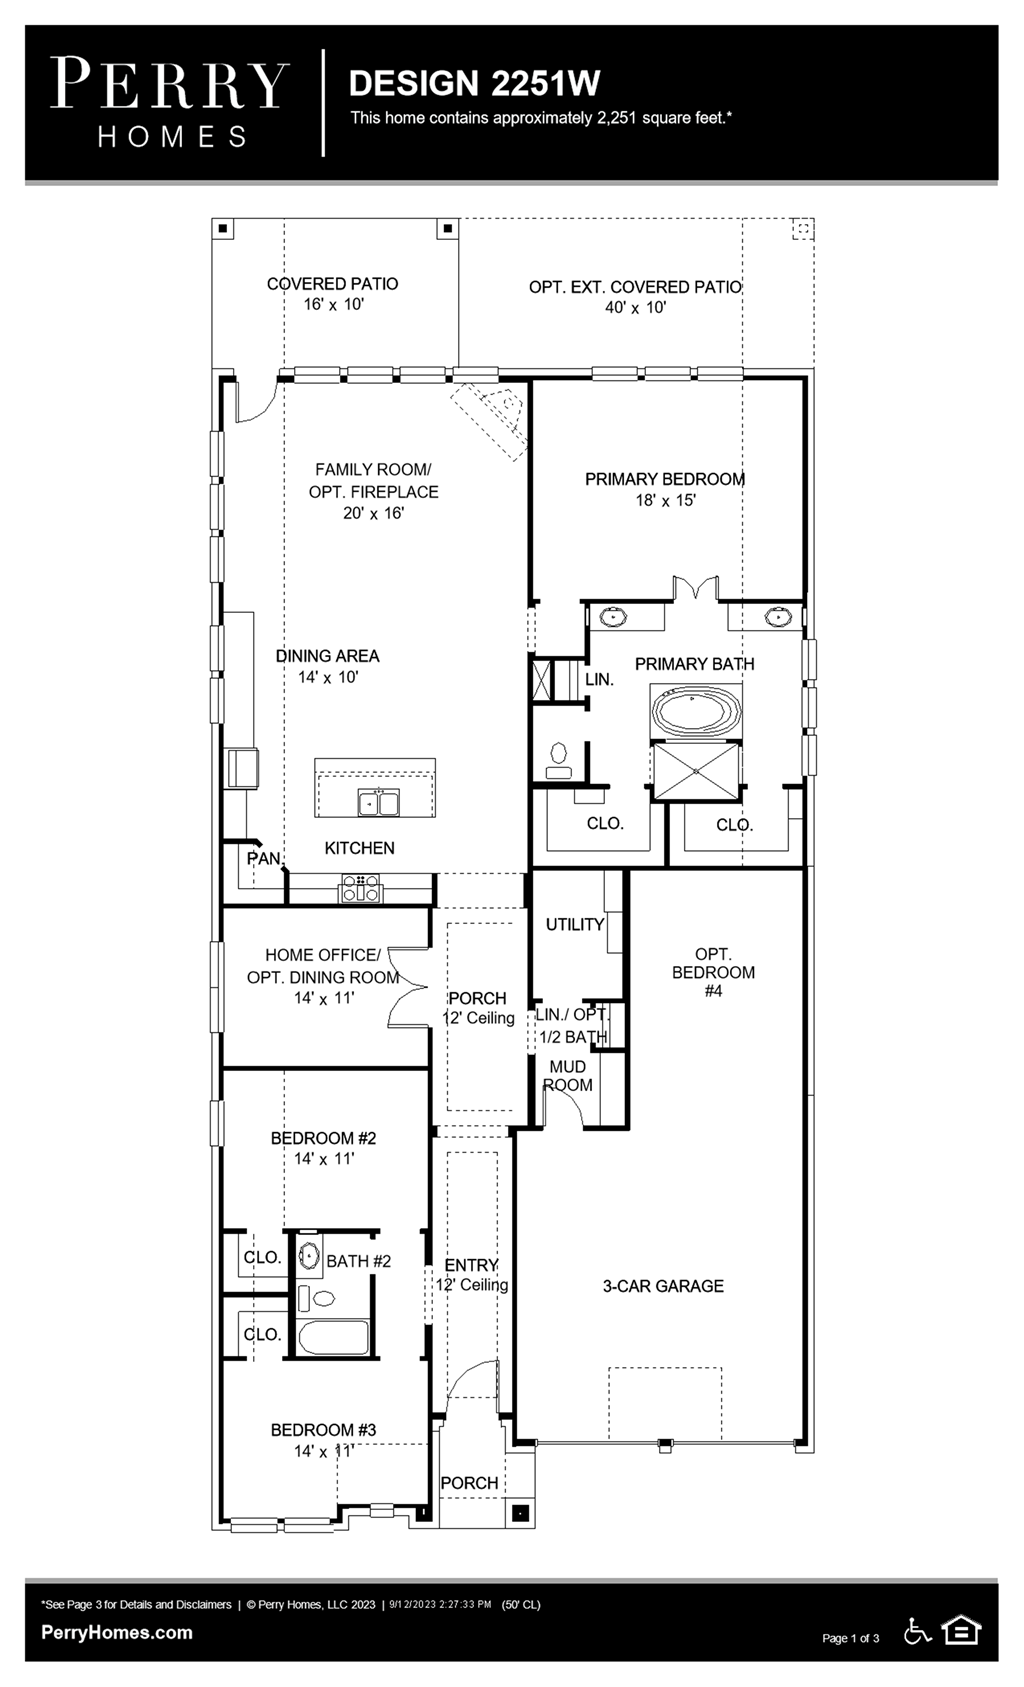 Floor Plan for 2251W